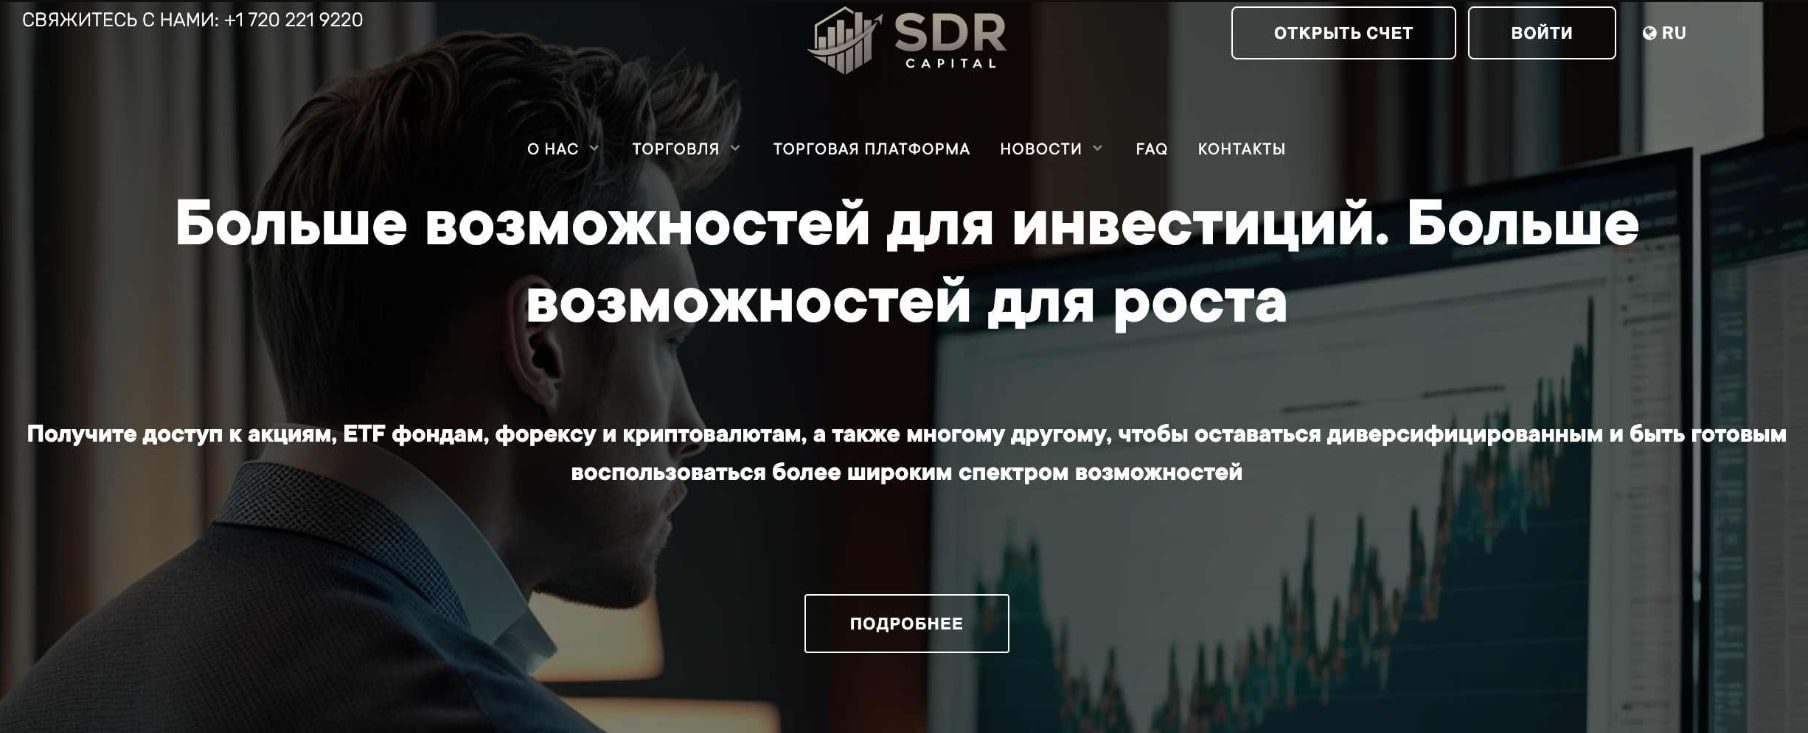 SDR capital сайт